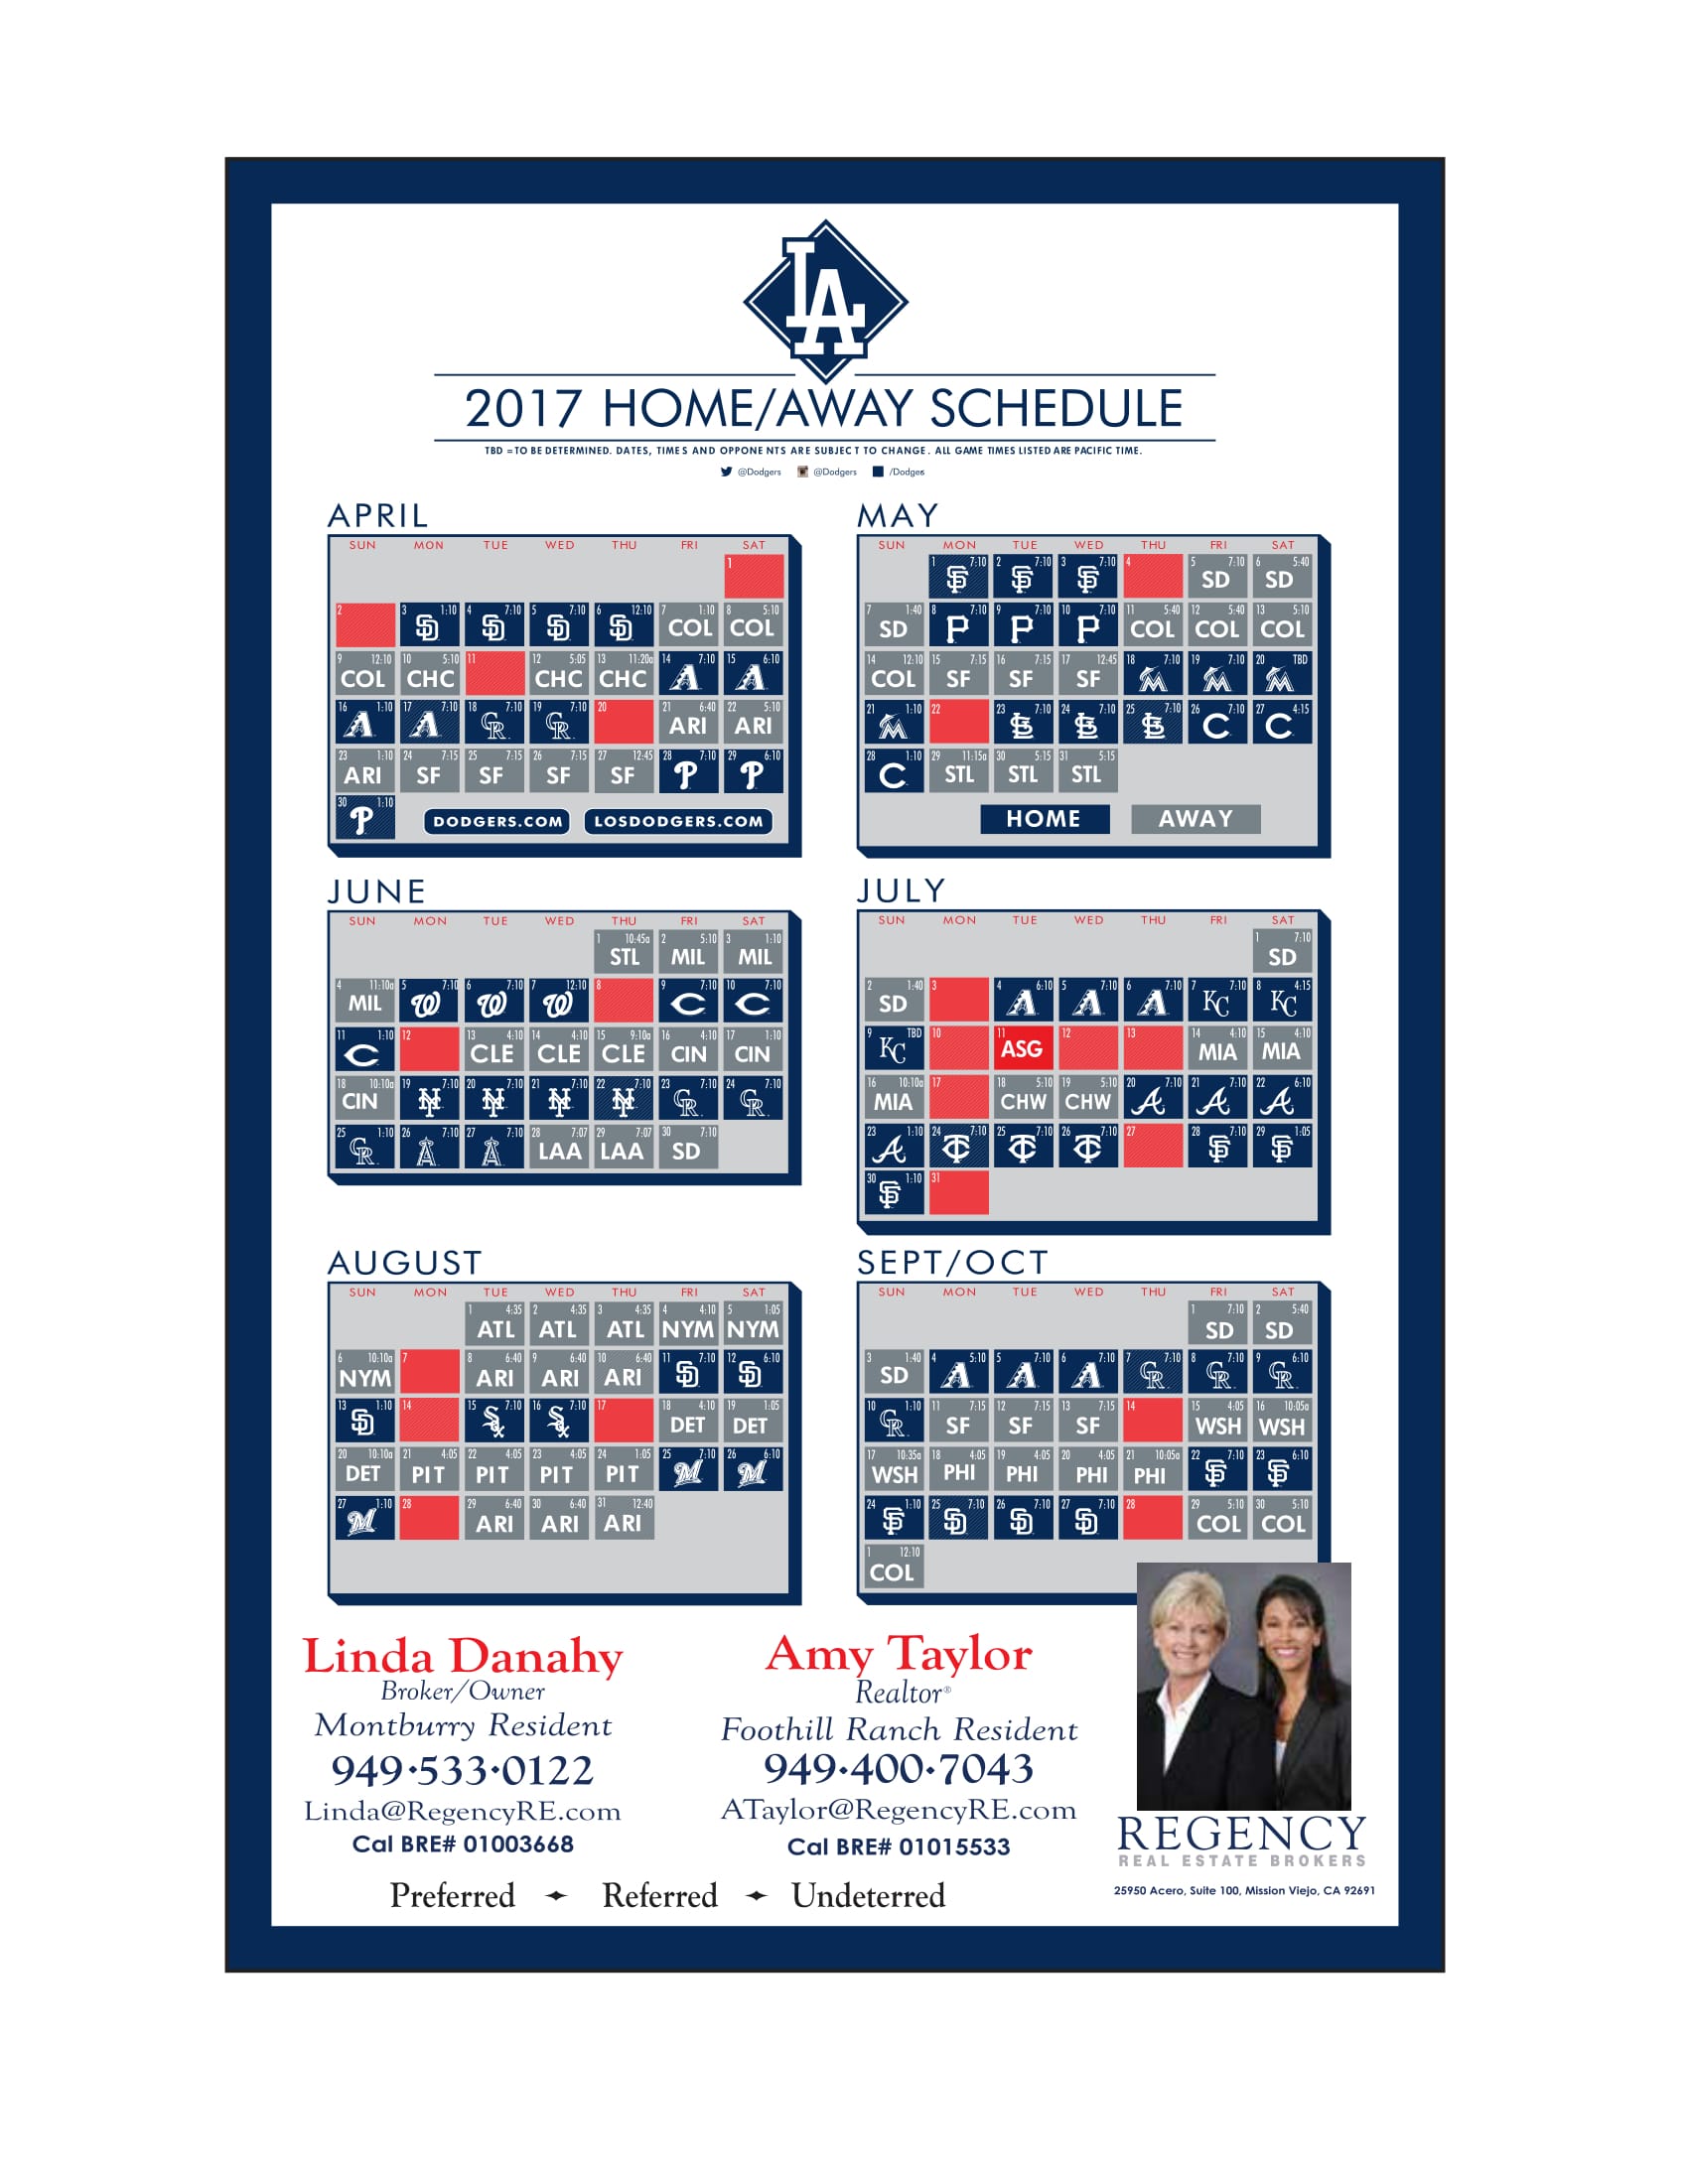 Printing Baseball Schedule Postcards